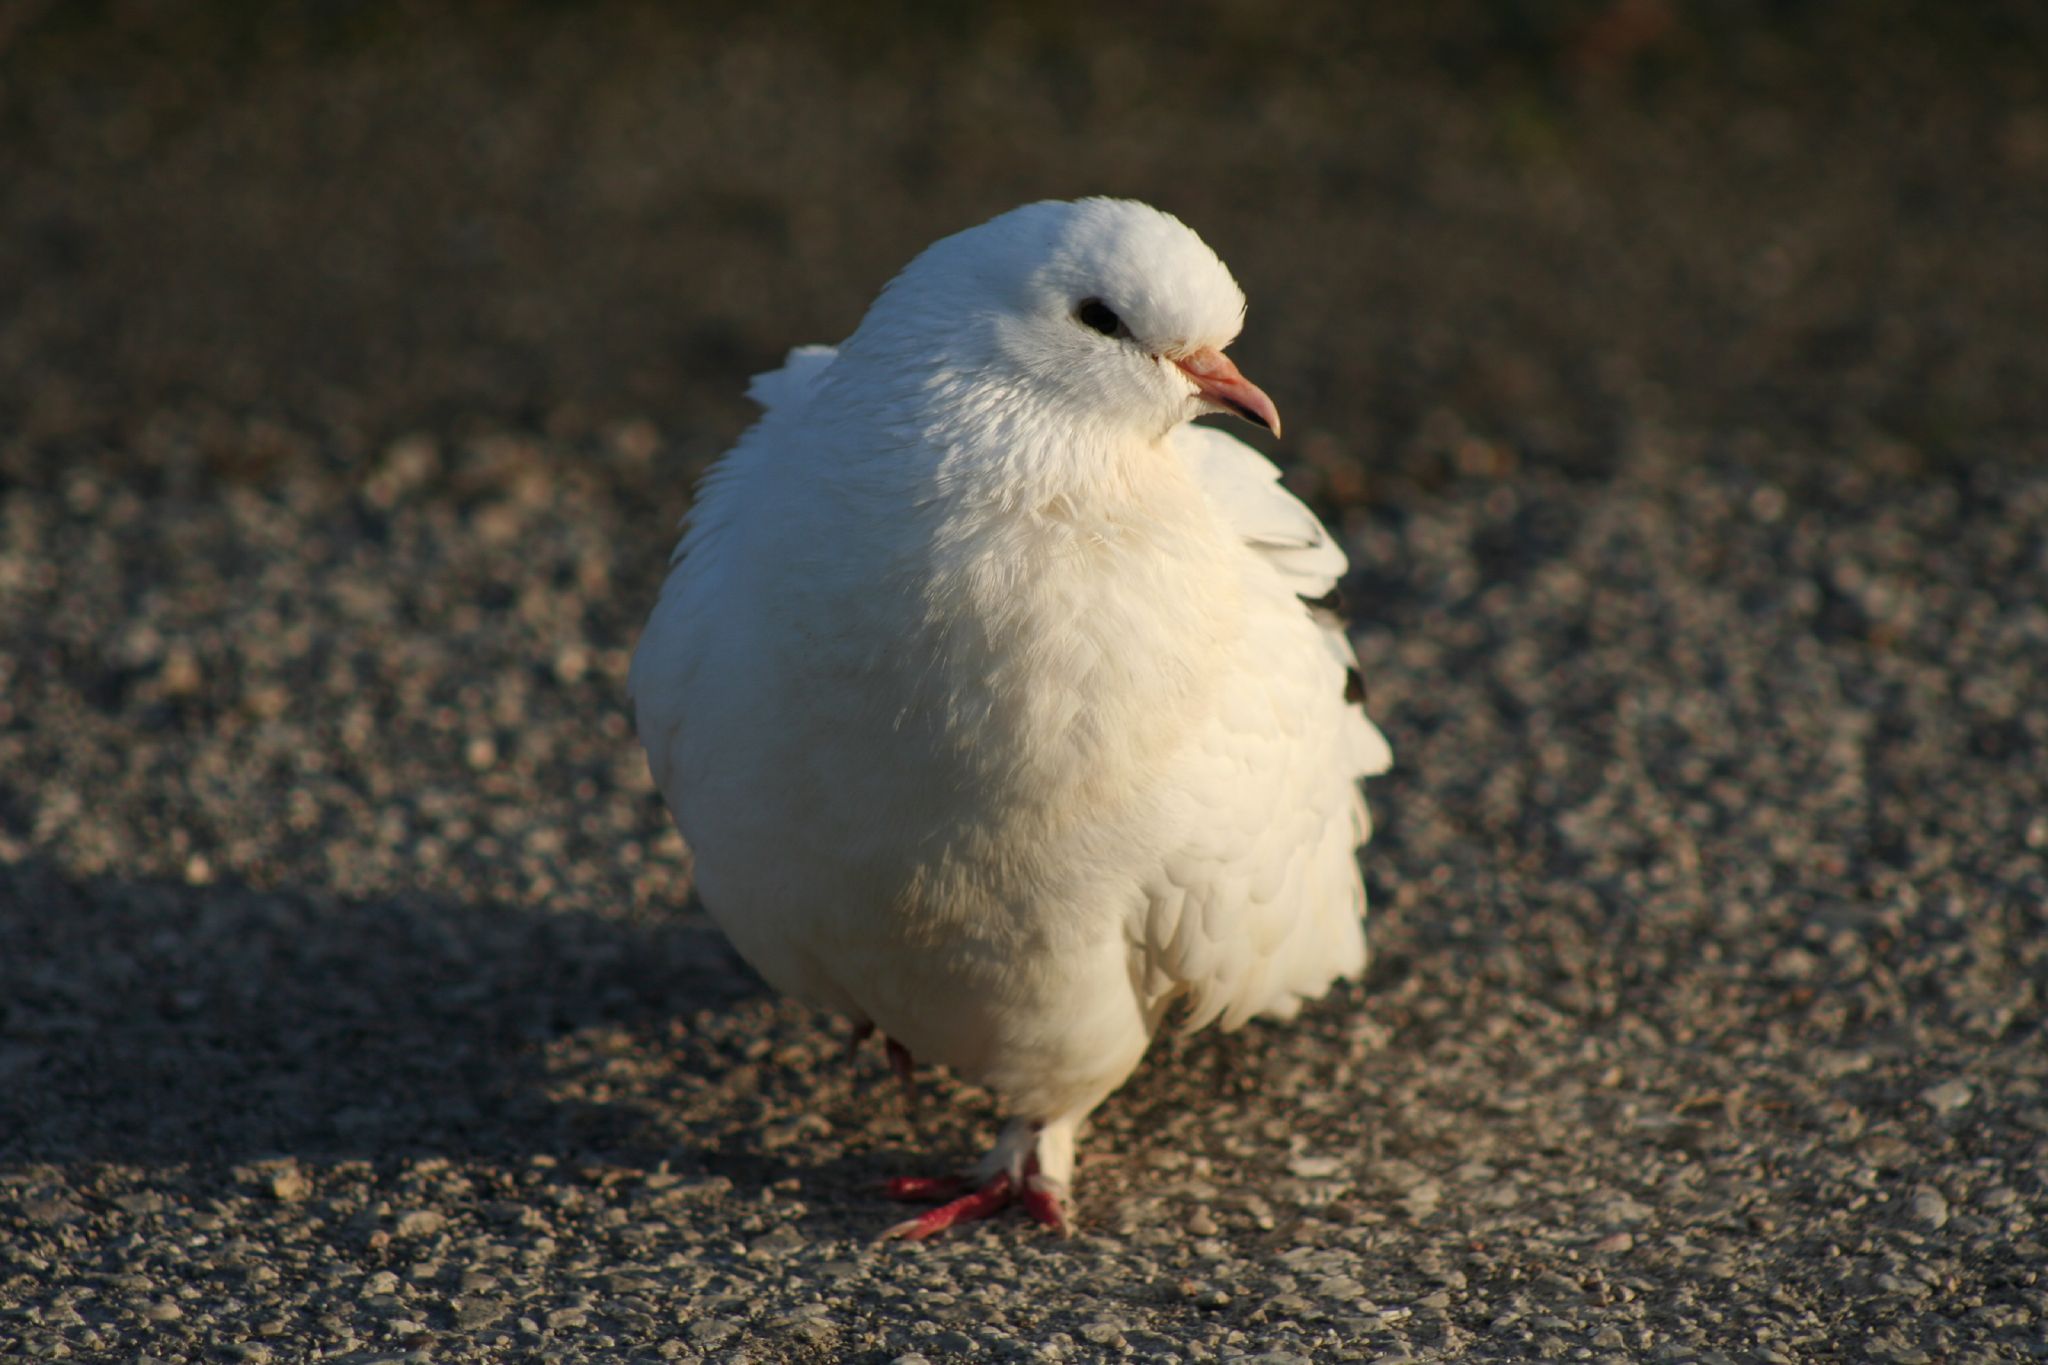 a white pigeon walking across the street in daylight